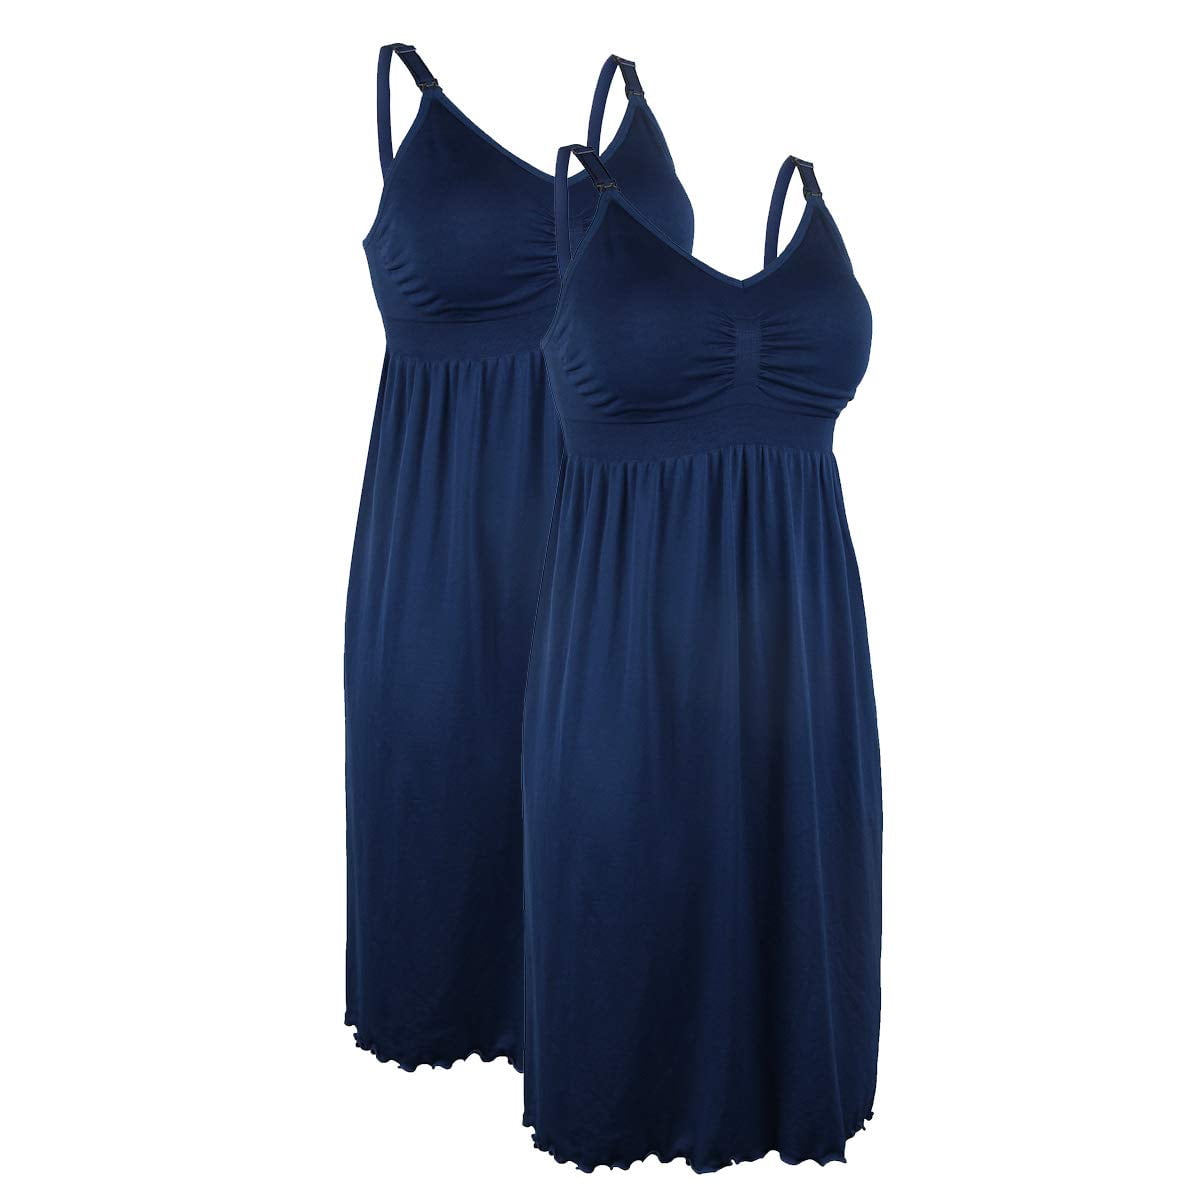 SUNNYME Women Sleeveless Nightdress Maternity Nursing Dresses Labour Nightgown Casual Summer Dress Loungewear